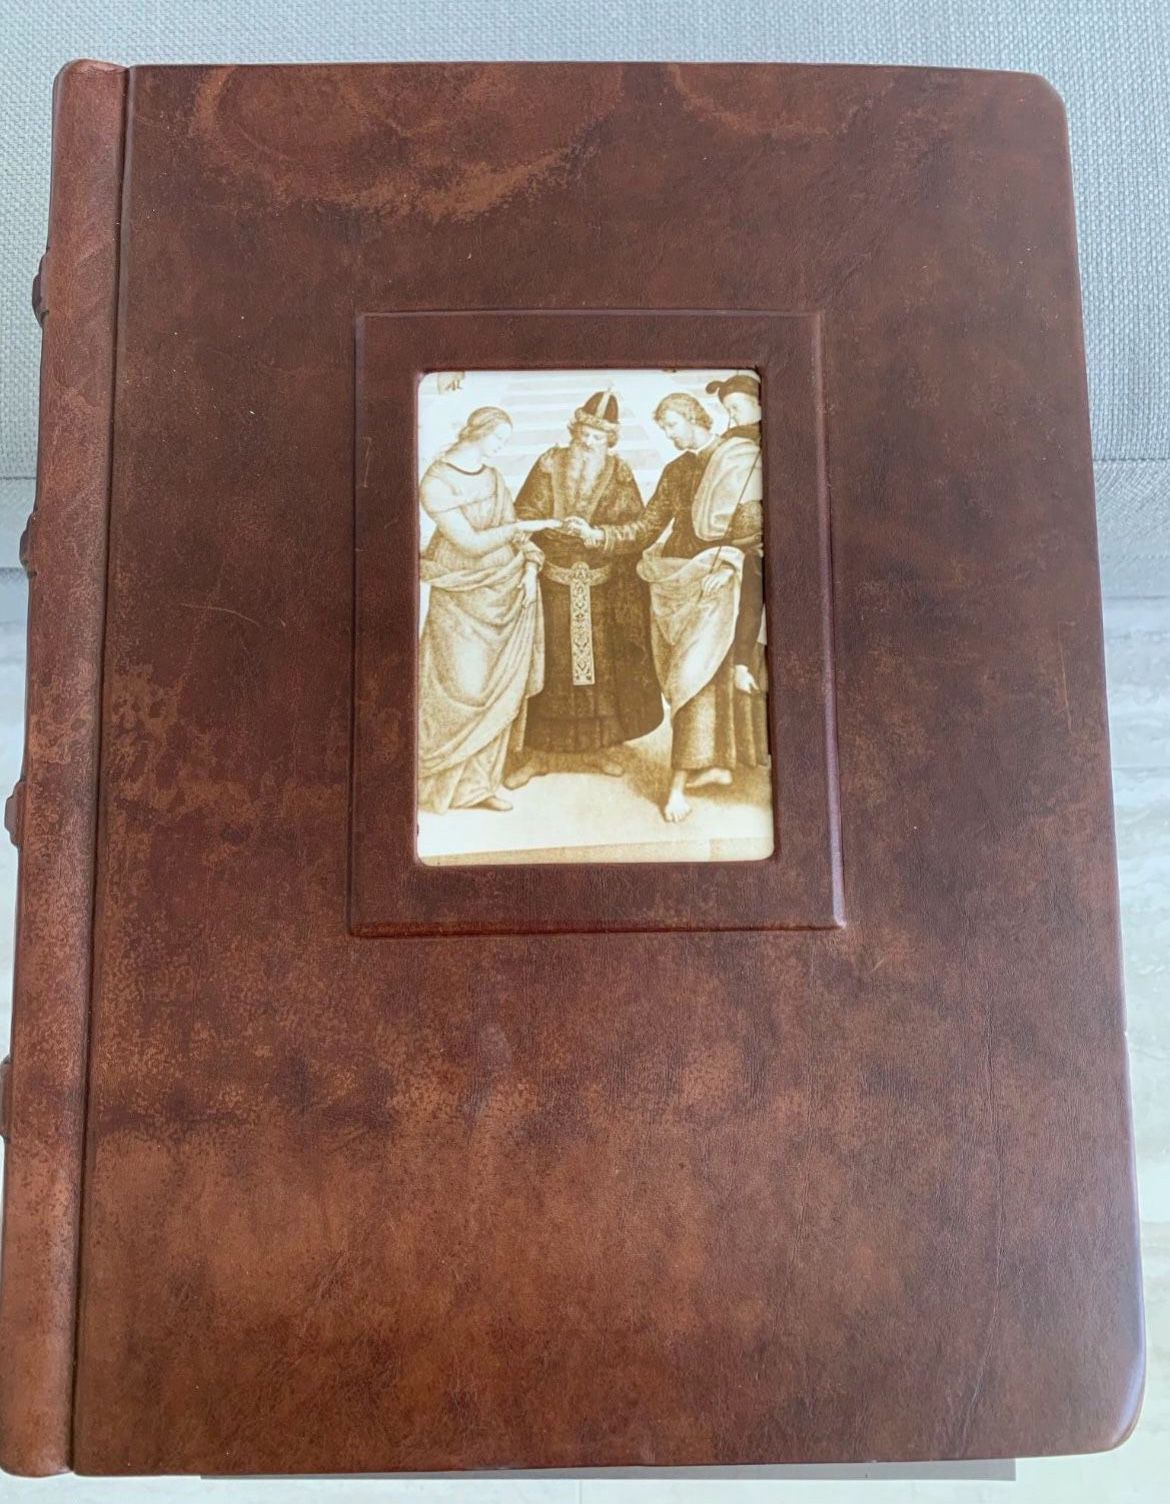 So Unique! Brown, leather bound 50 page scrapbook